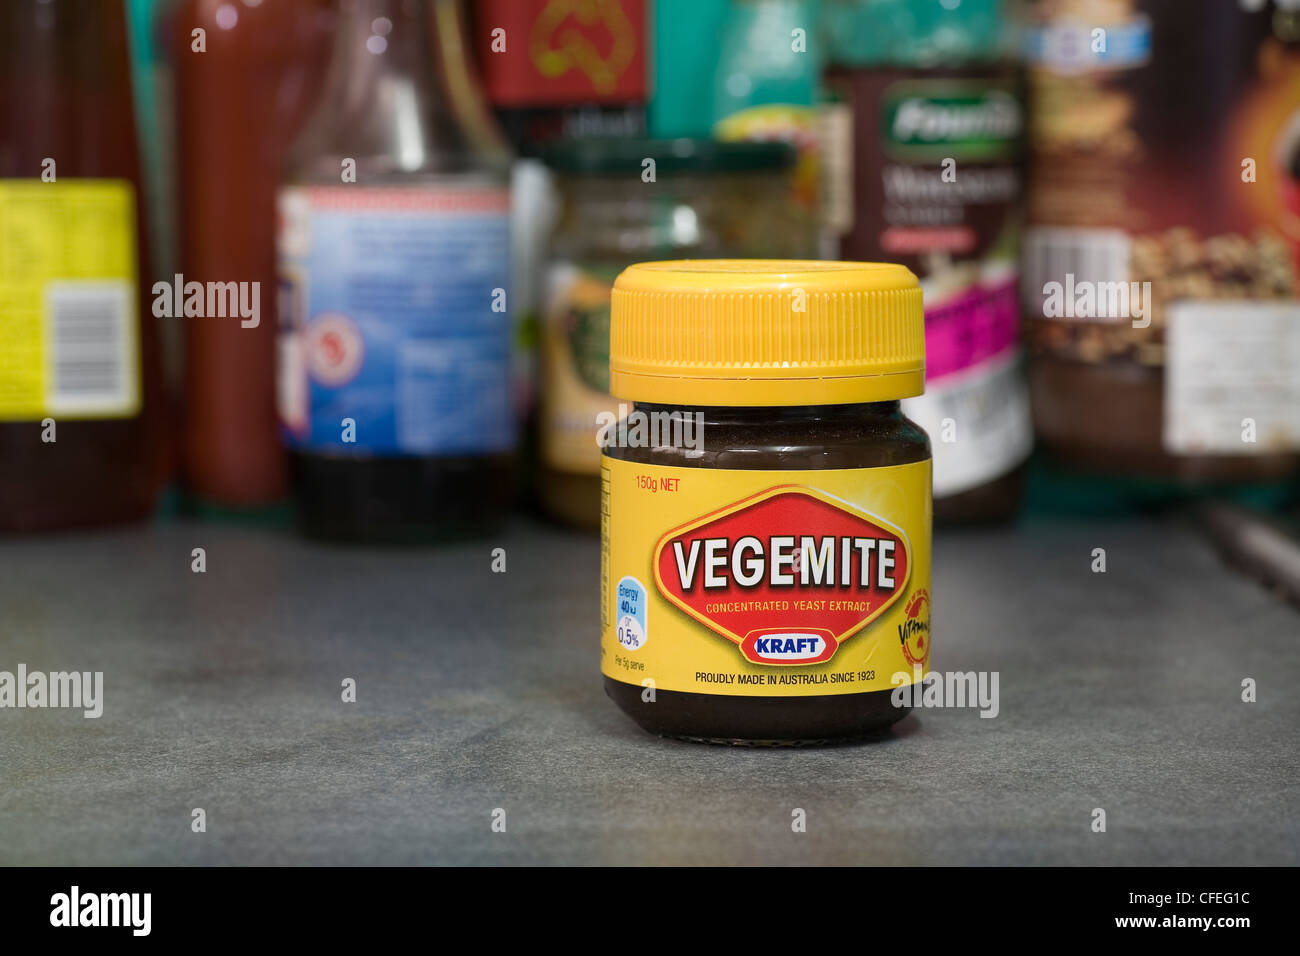 Vegemite Sandwich stock image. Image of knife, food, extract